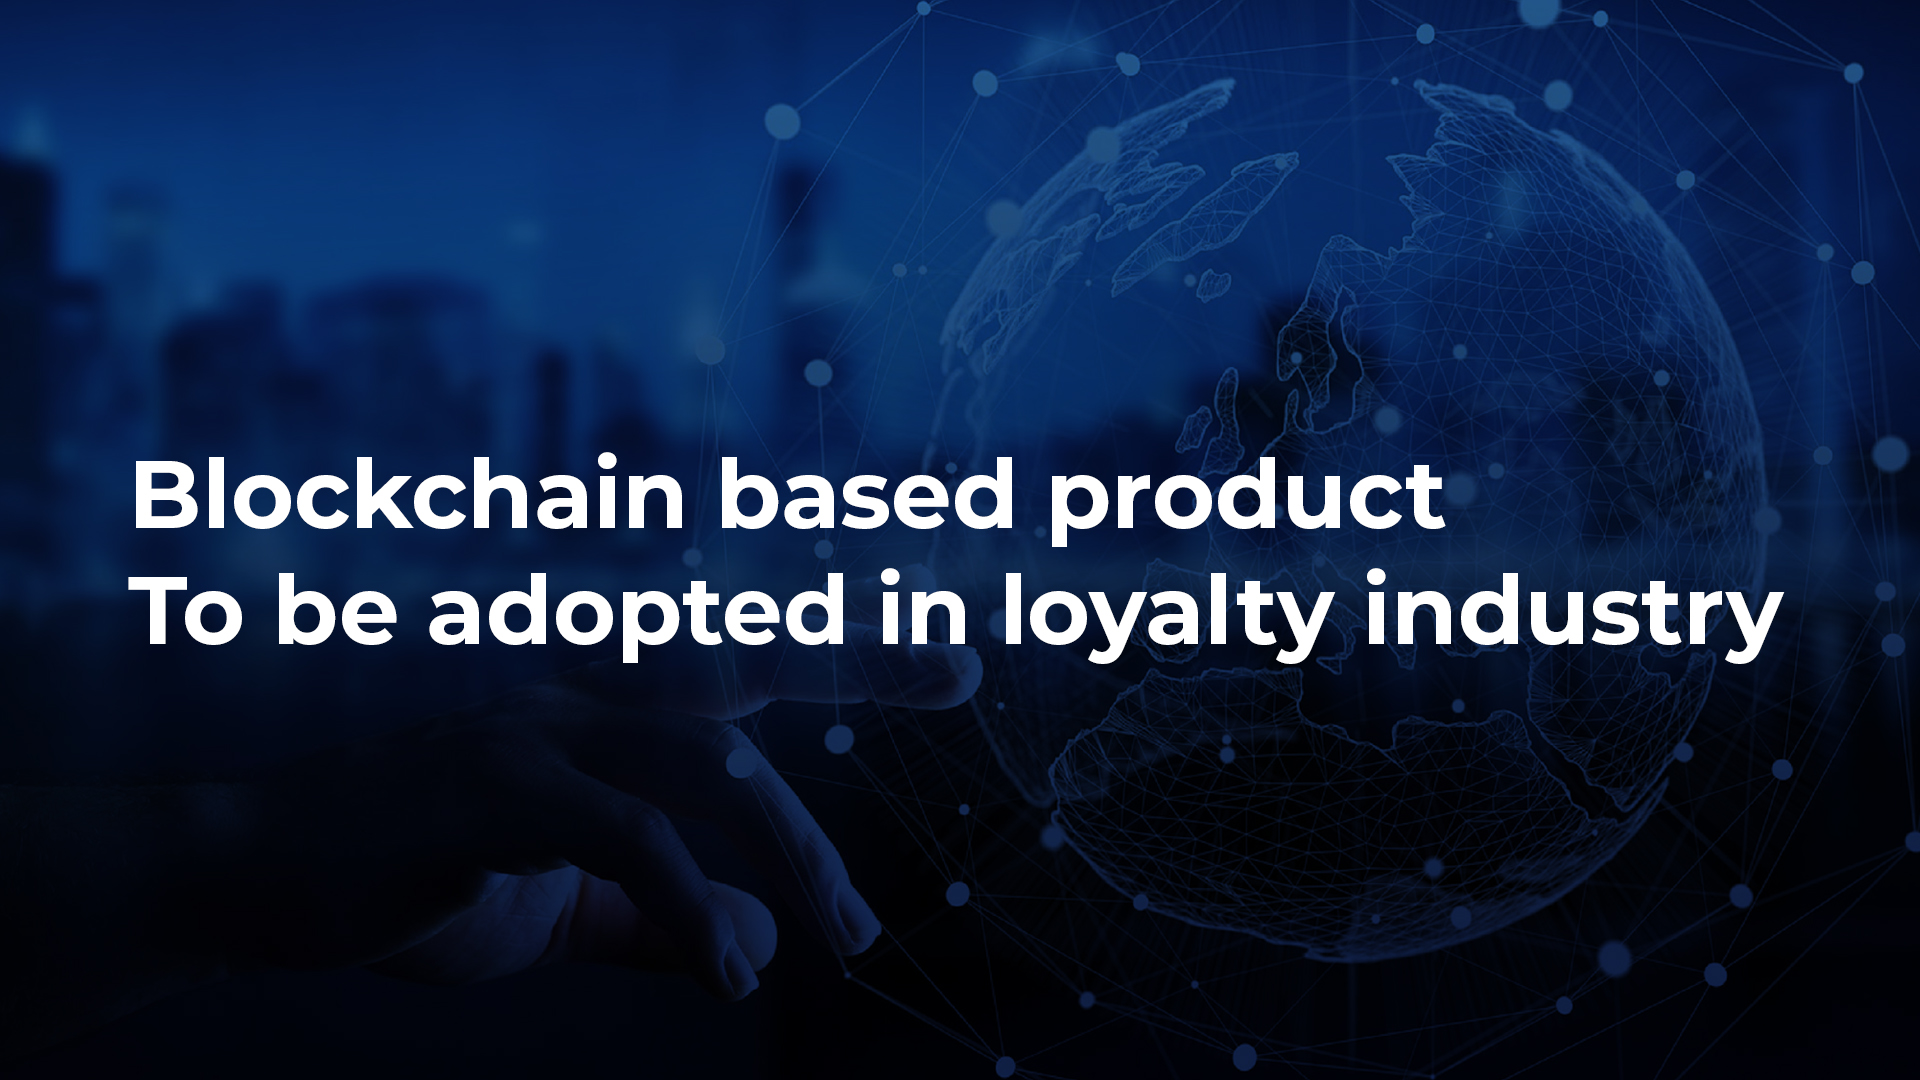 blockchain based loyalty programs